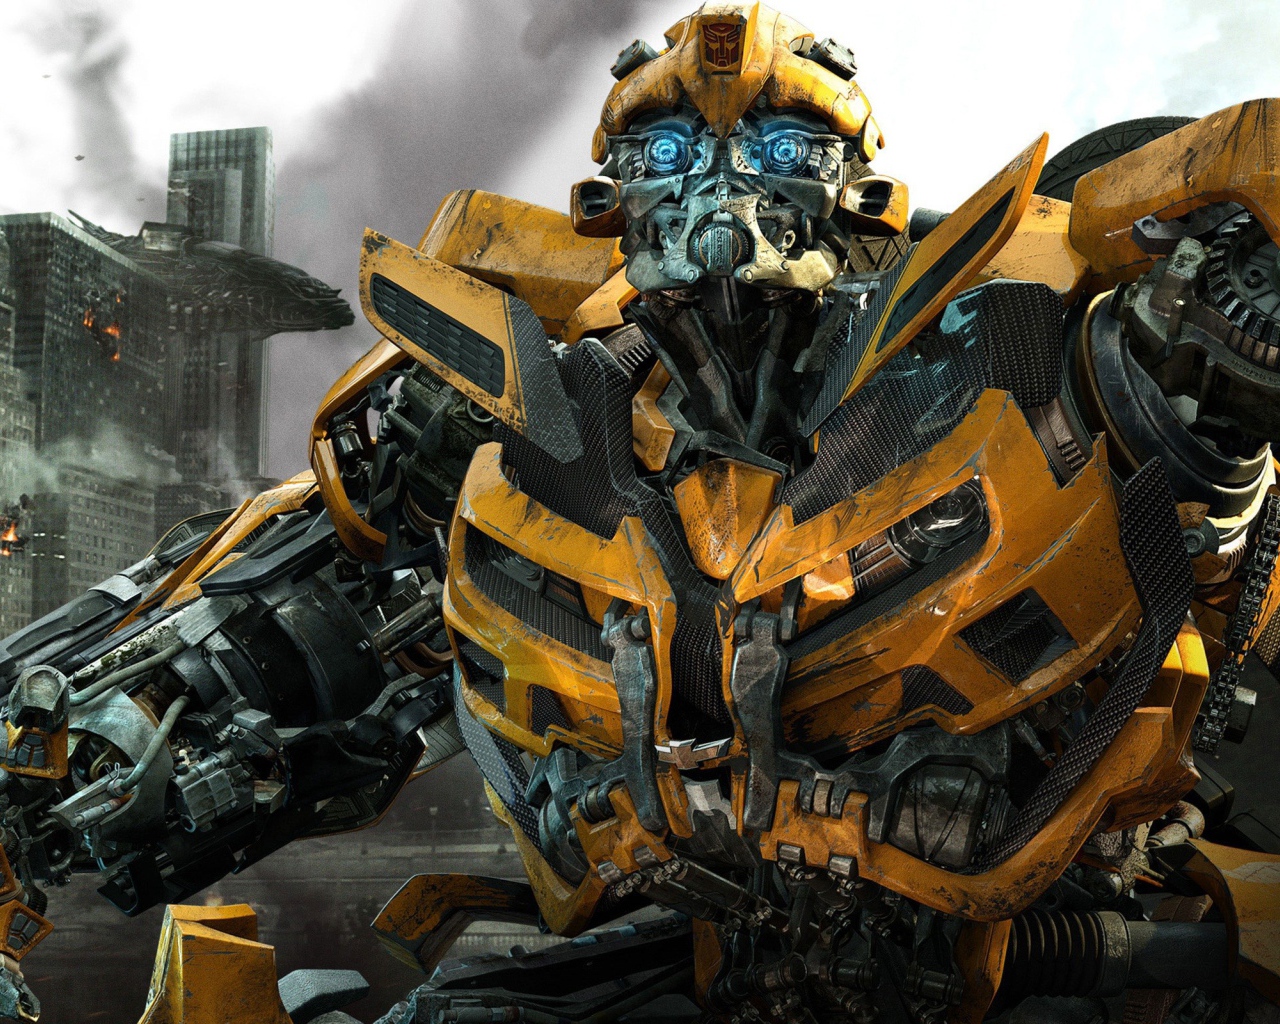 Transformer Bumblebee, movie Transformers